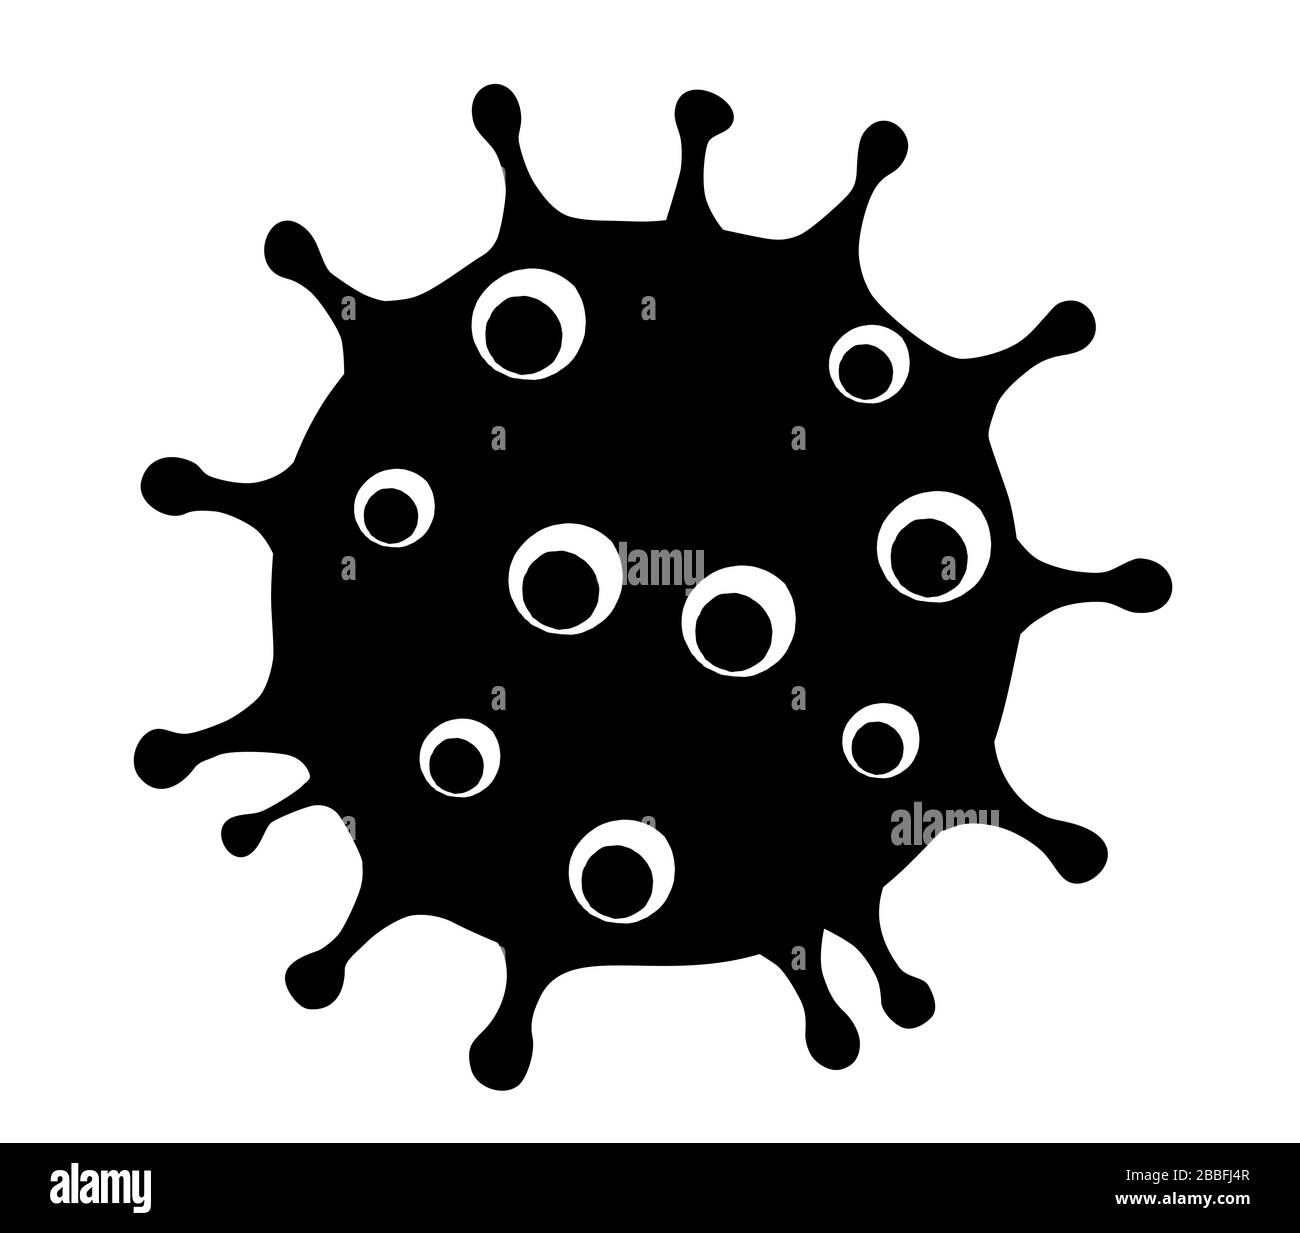 coronavirus covid virus pandemic symbol black icon illustration Stock Photo